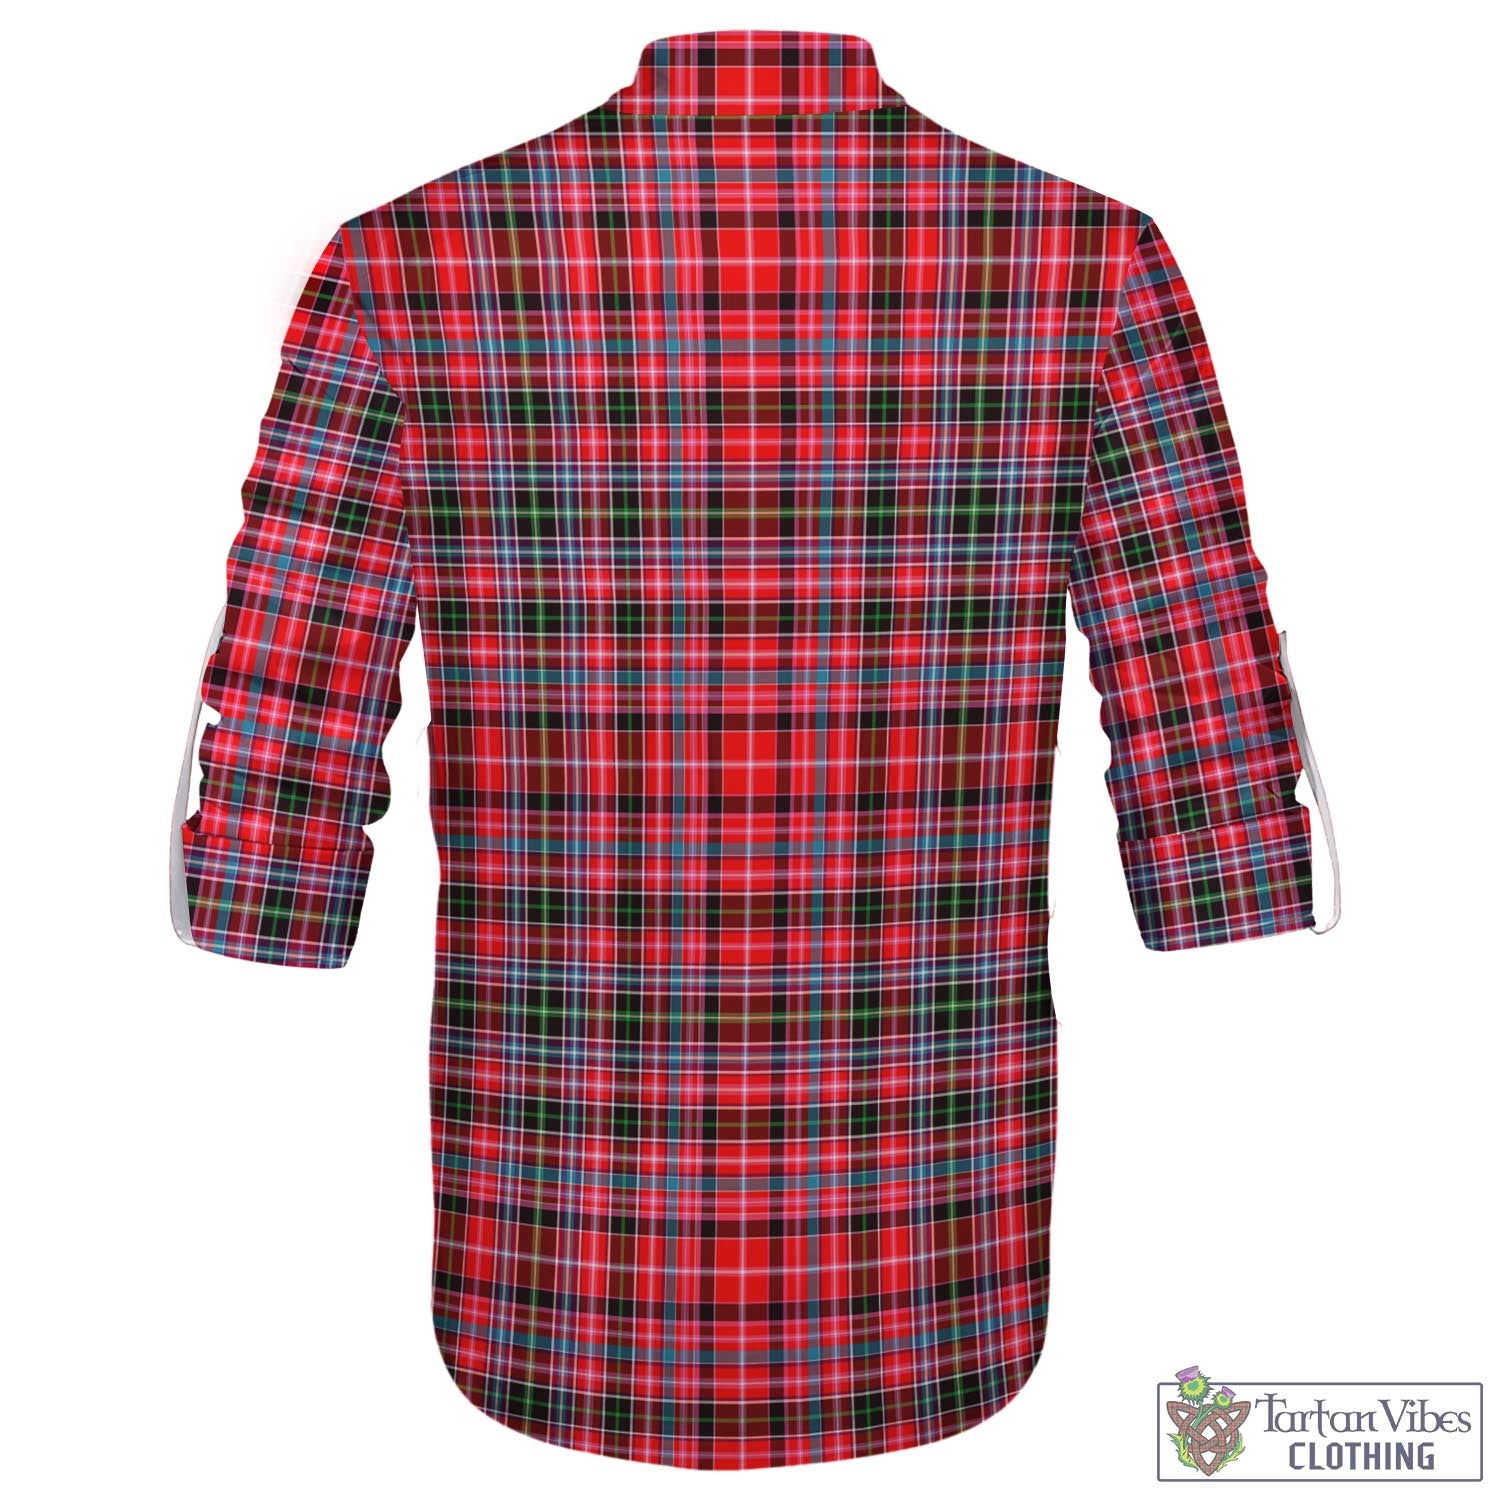 Tartan Vibes Clothing Udny Tartan Men's Scottish Traditional Jacobite Ghillie Kilt Shirt with Family Crest